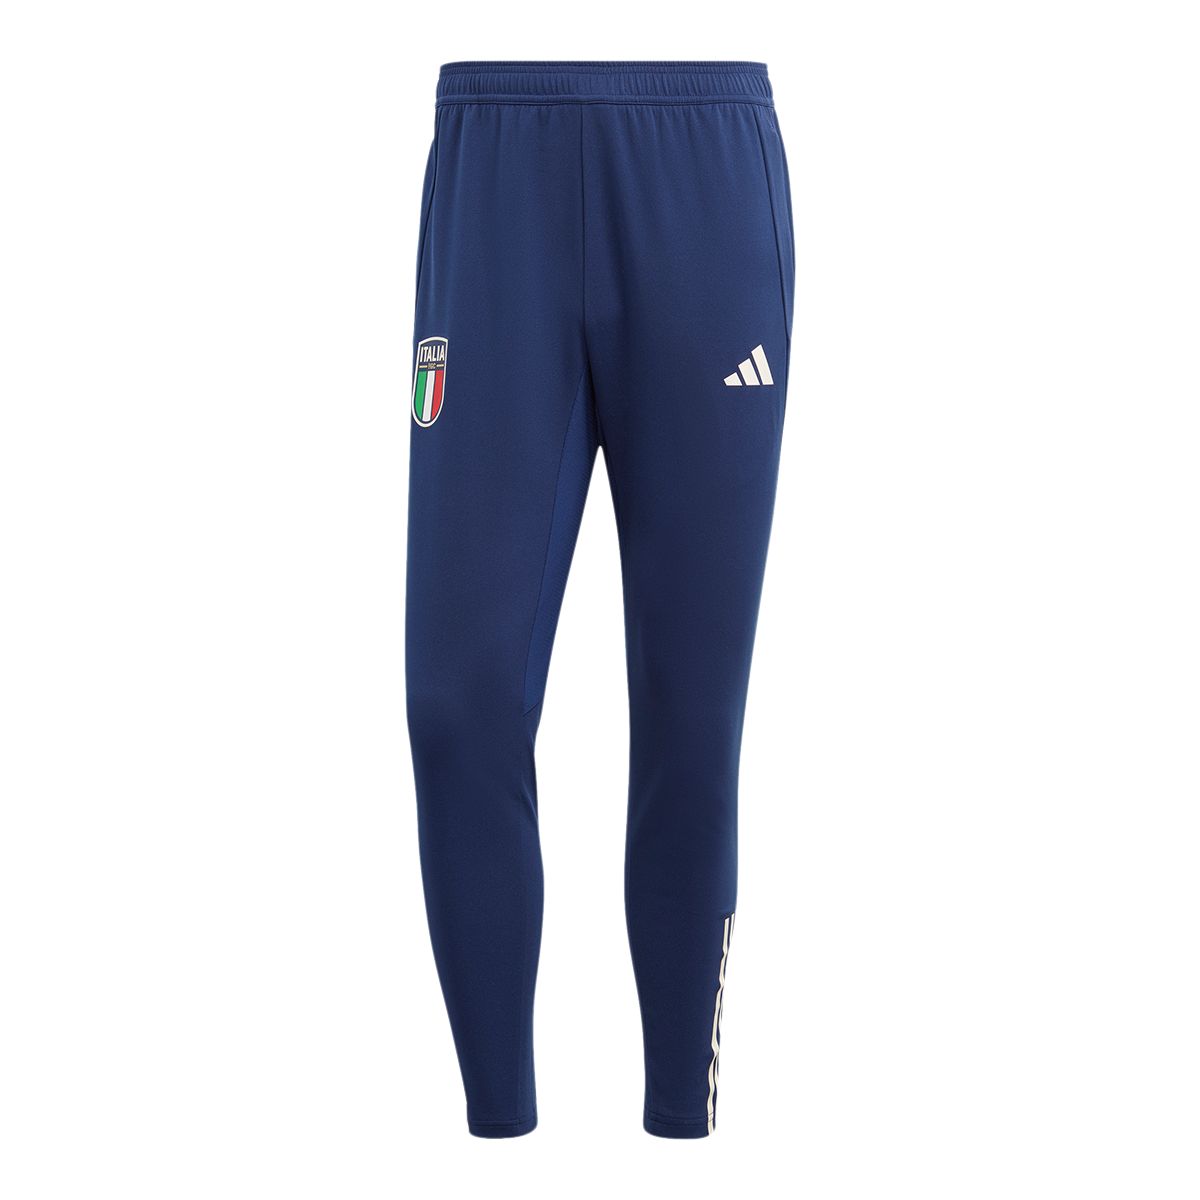 Italy adidas Training Pants